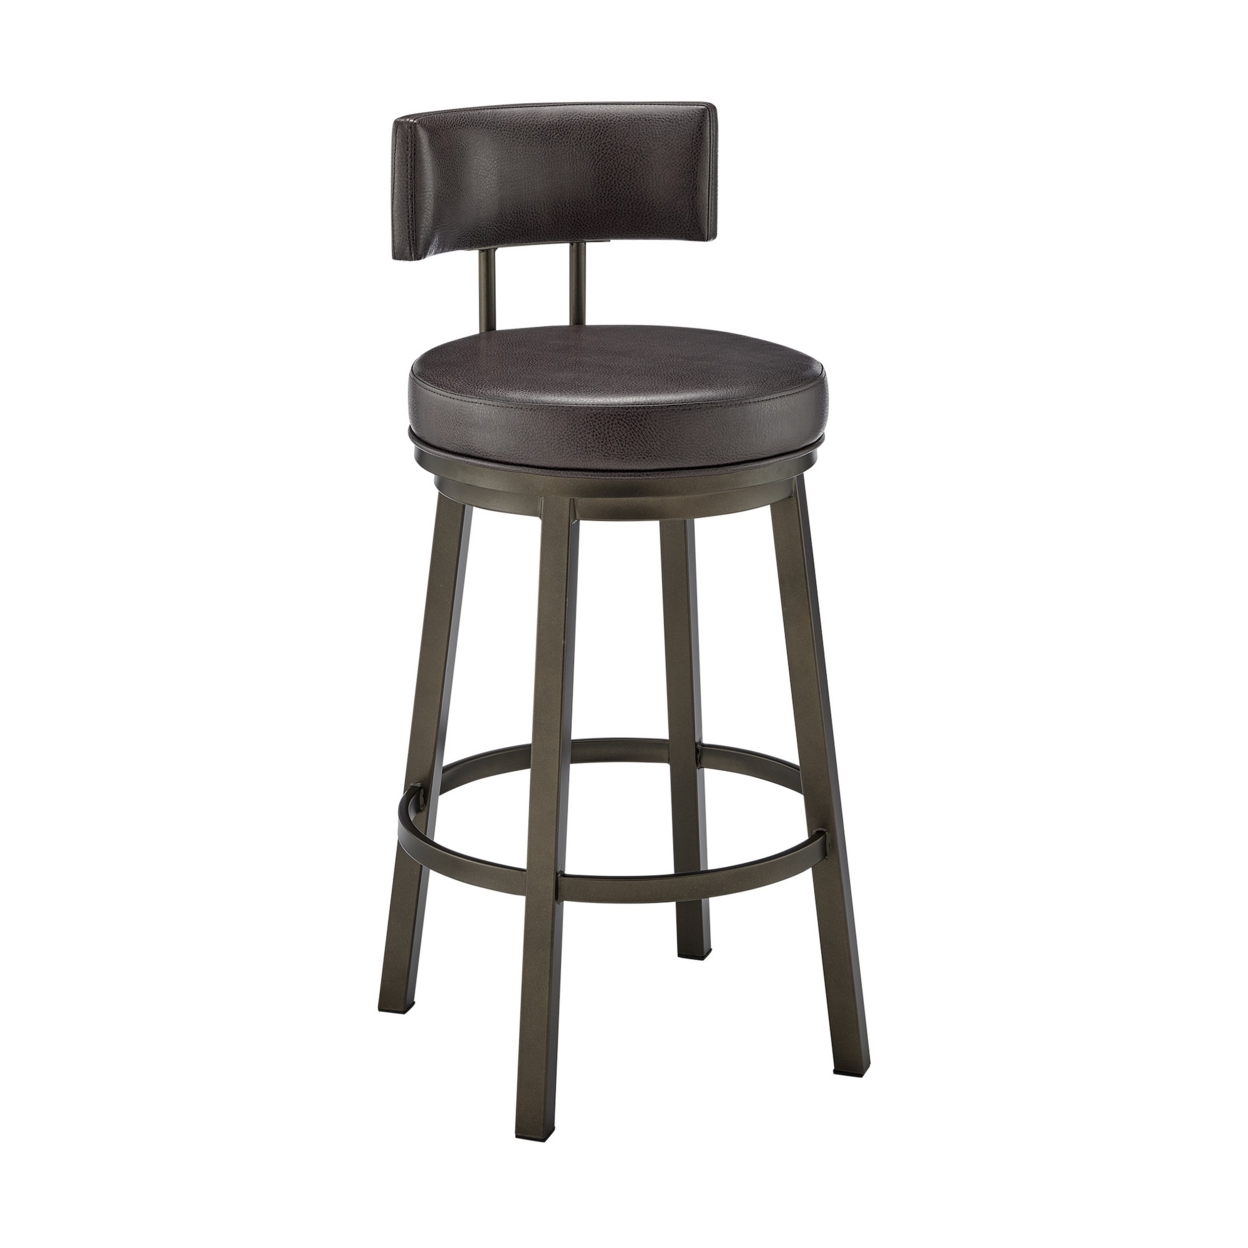 Eleanor 30 Inch Swivel Bar Stool Chair, Round Mocha Brown Faux Leather Seat- Saltoro Sherpi